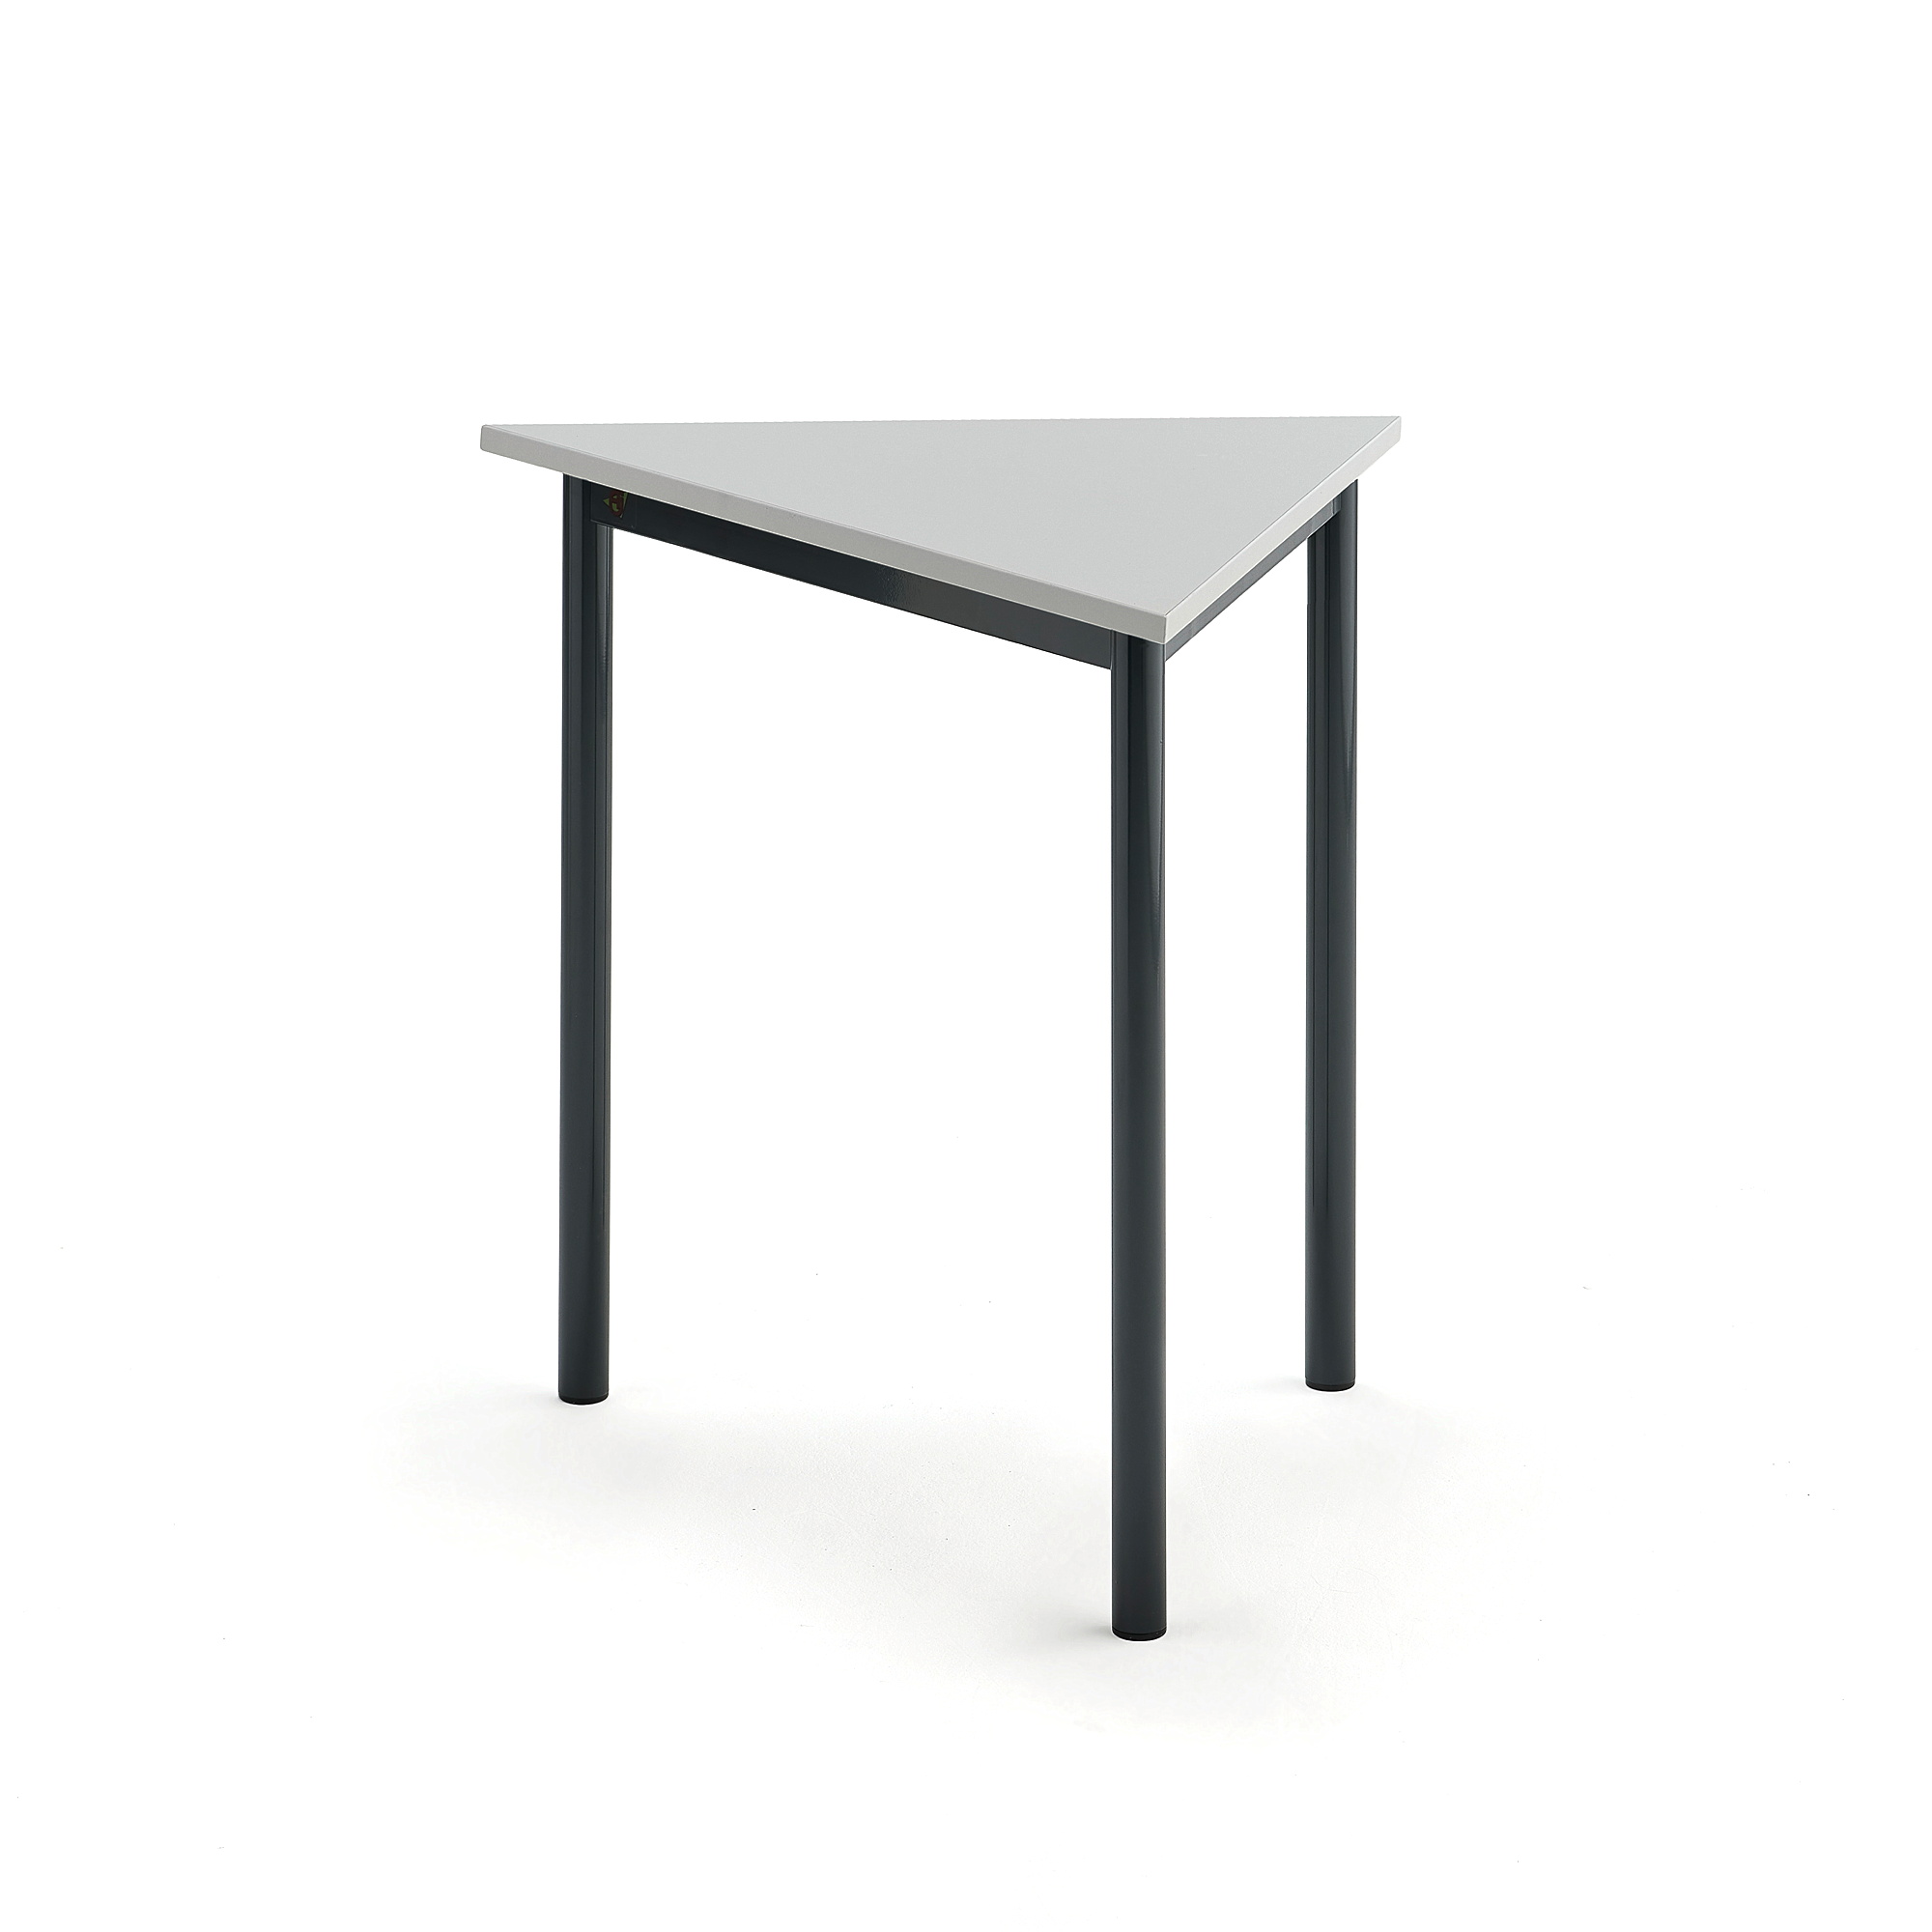 Stůl BORÅS TRIANGEL, 800x700x720 mm, antracitově šedé nohy, HPL deska, šedá